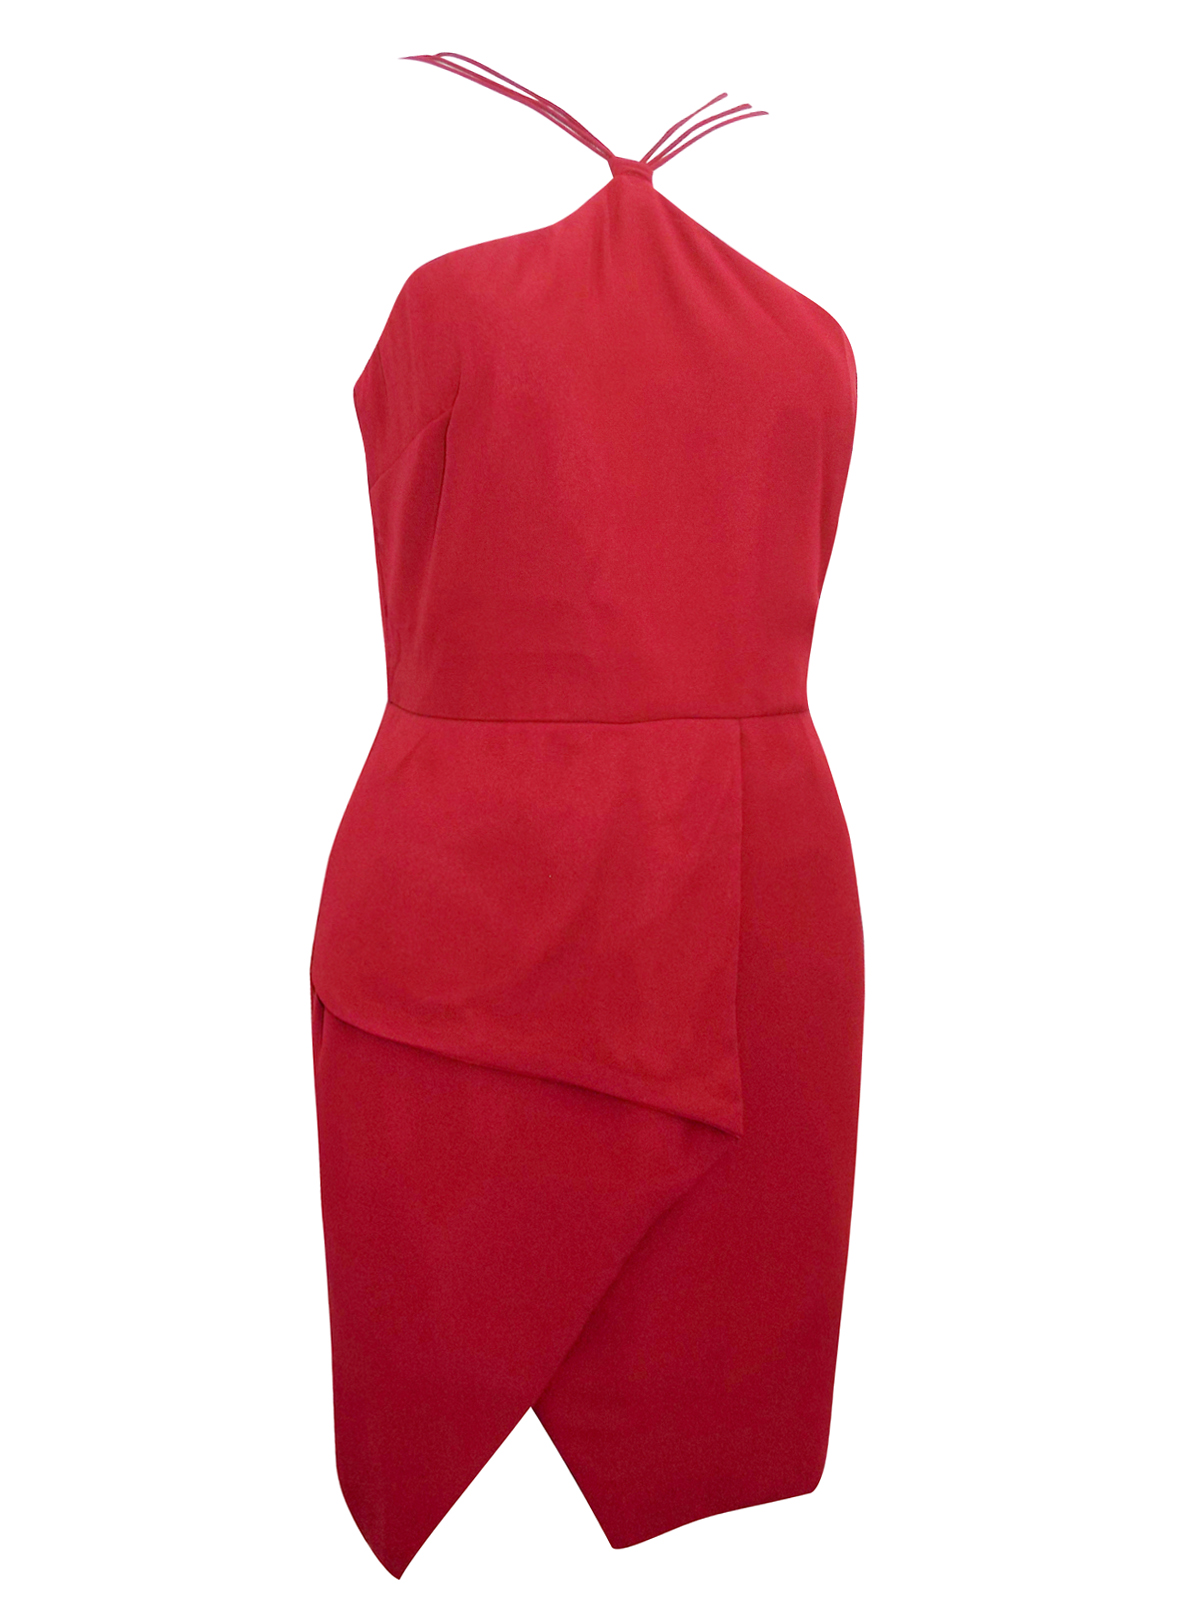 V Label London - - VLabel MAROON Brompton Mini Dress - Size 4 to 10